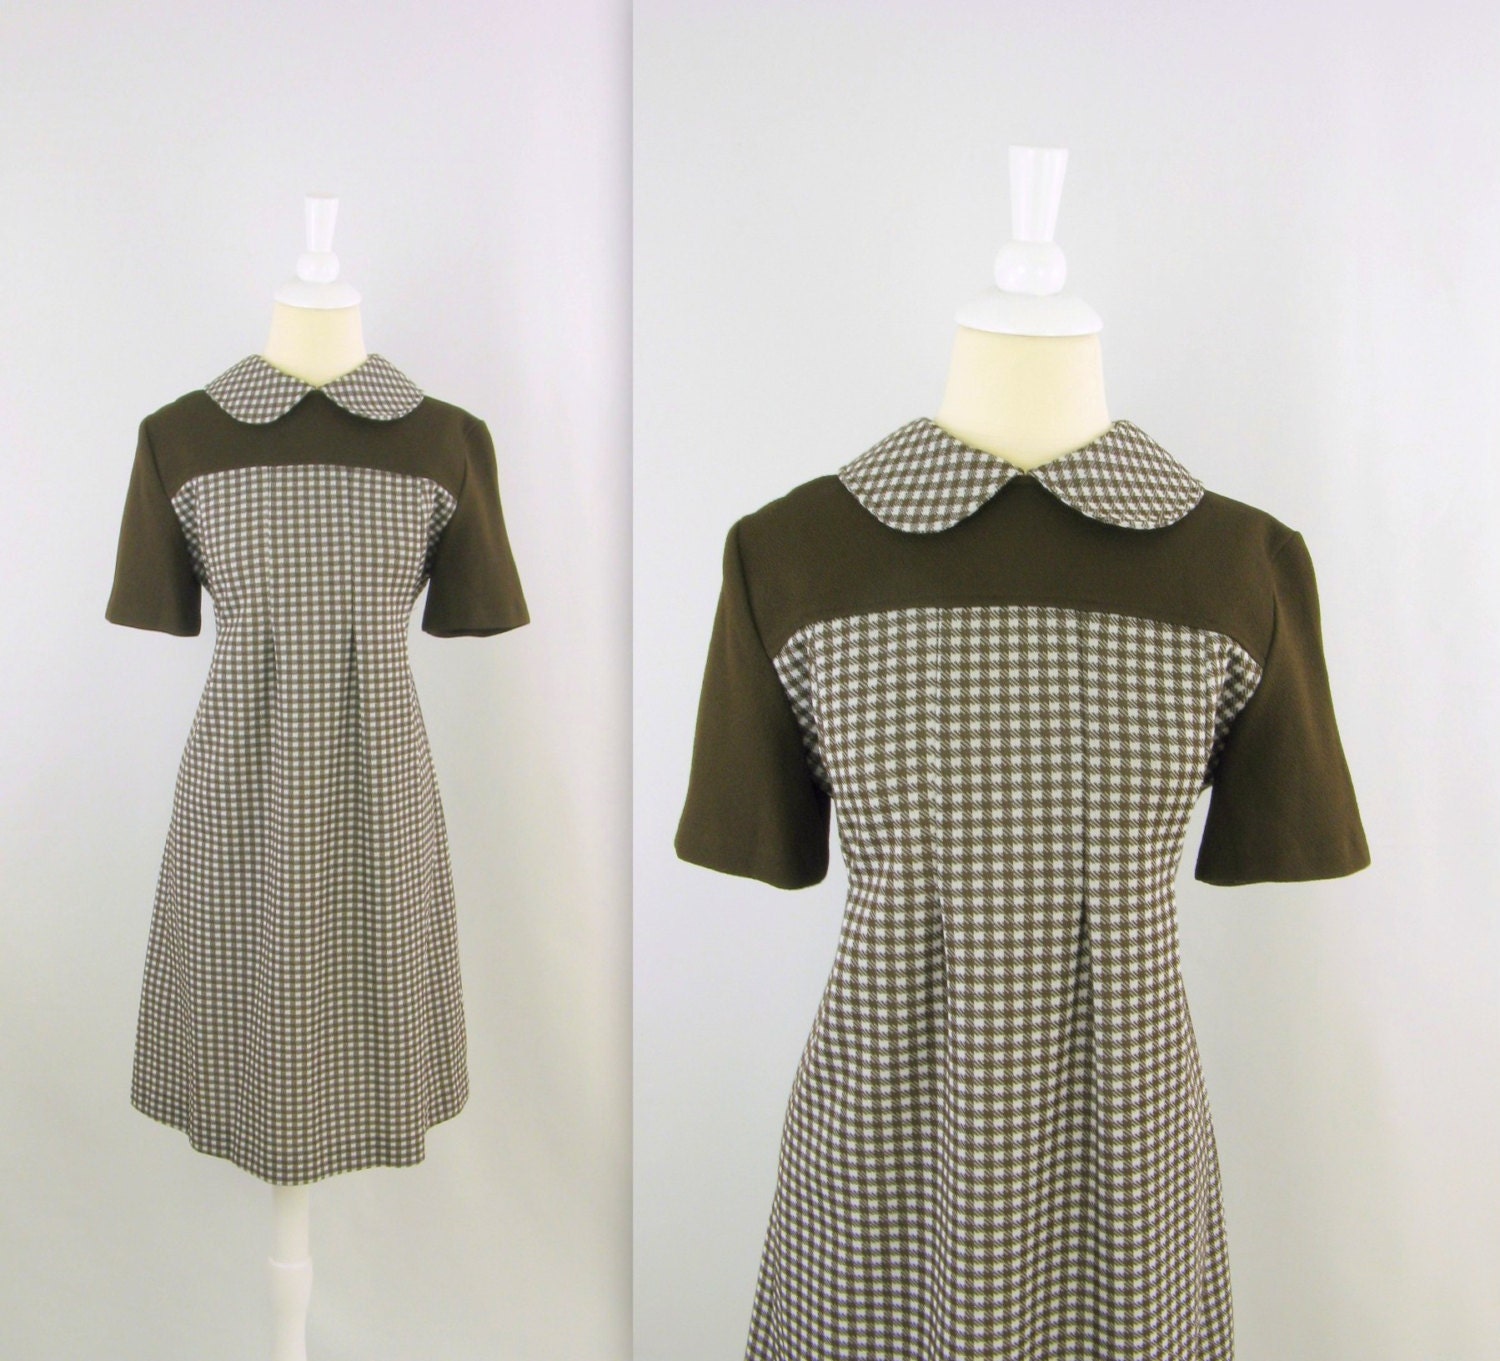 Vintage 1960s Mod Dress w/ Peter Pan Collar in Brown & White Check - Medium - TwoMoxie